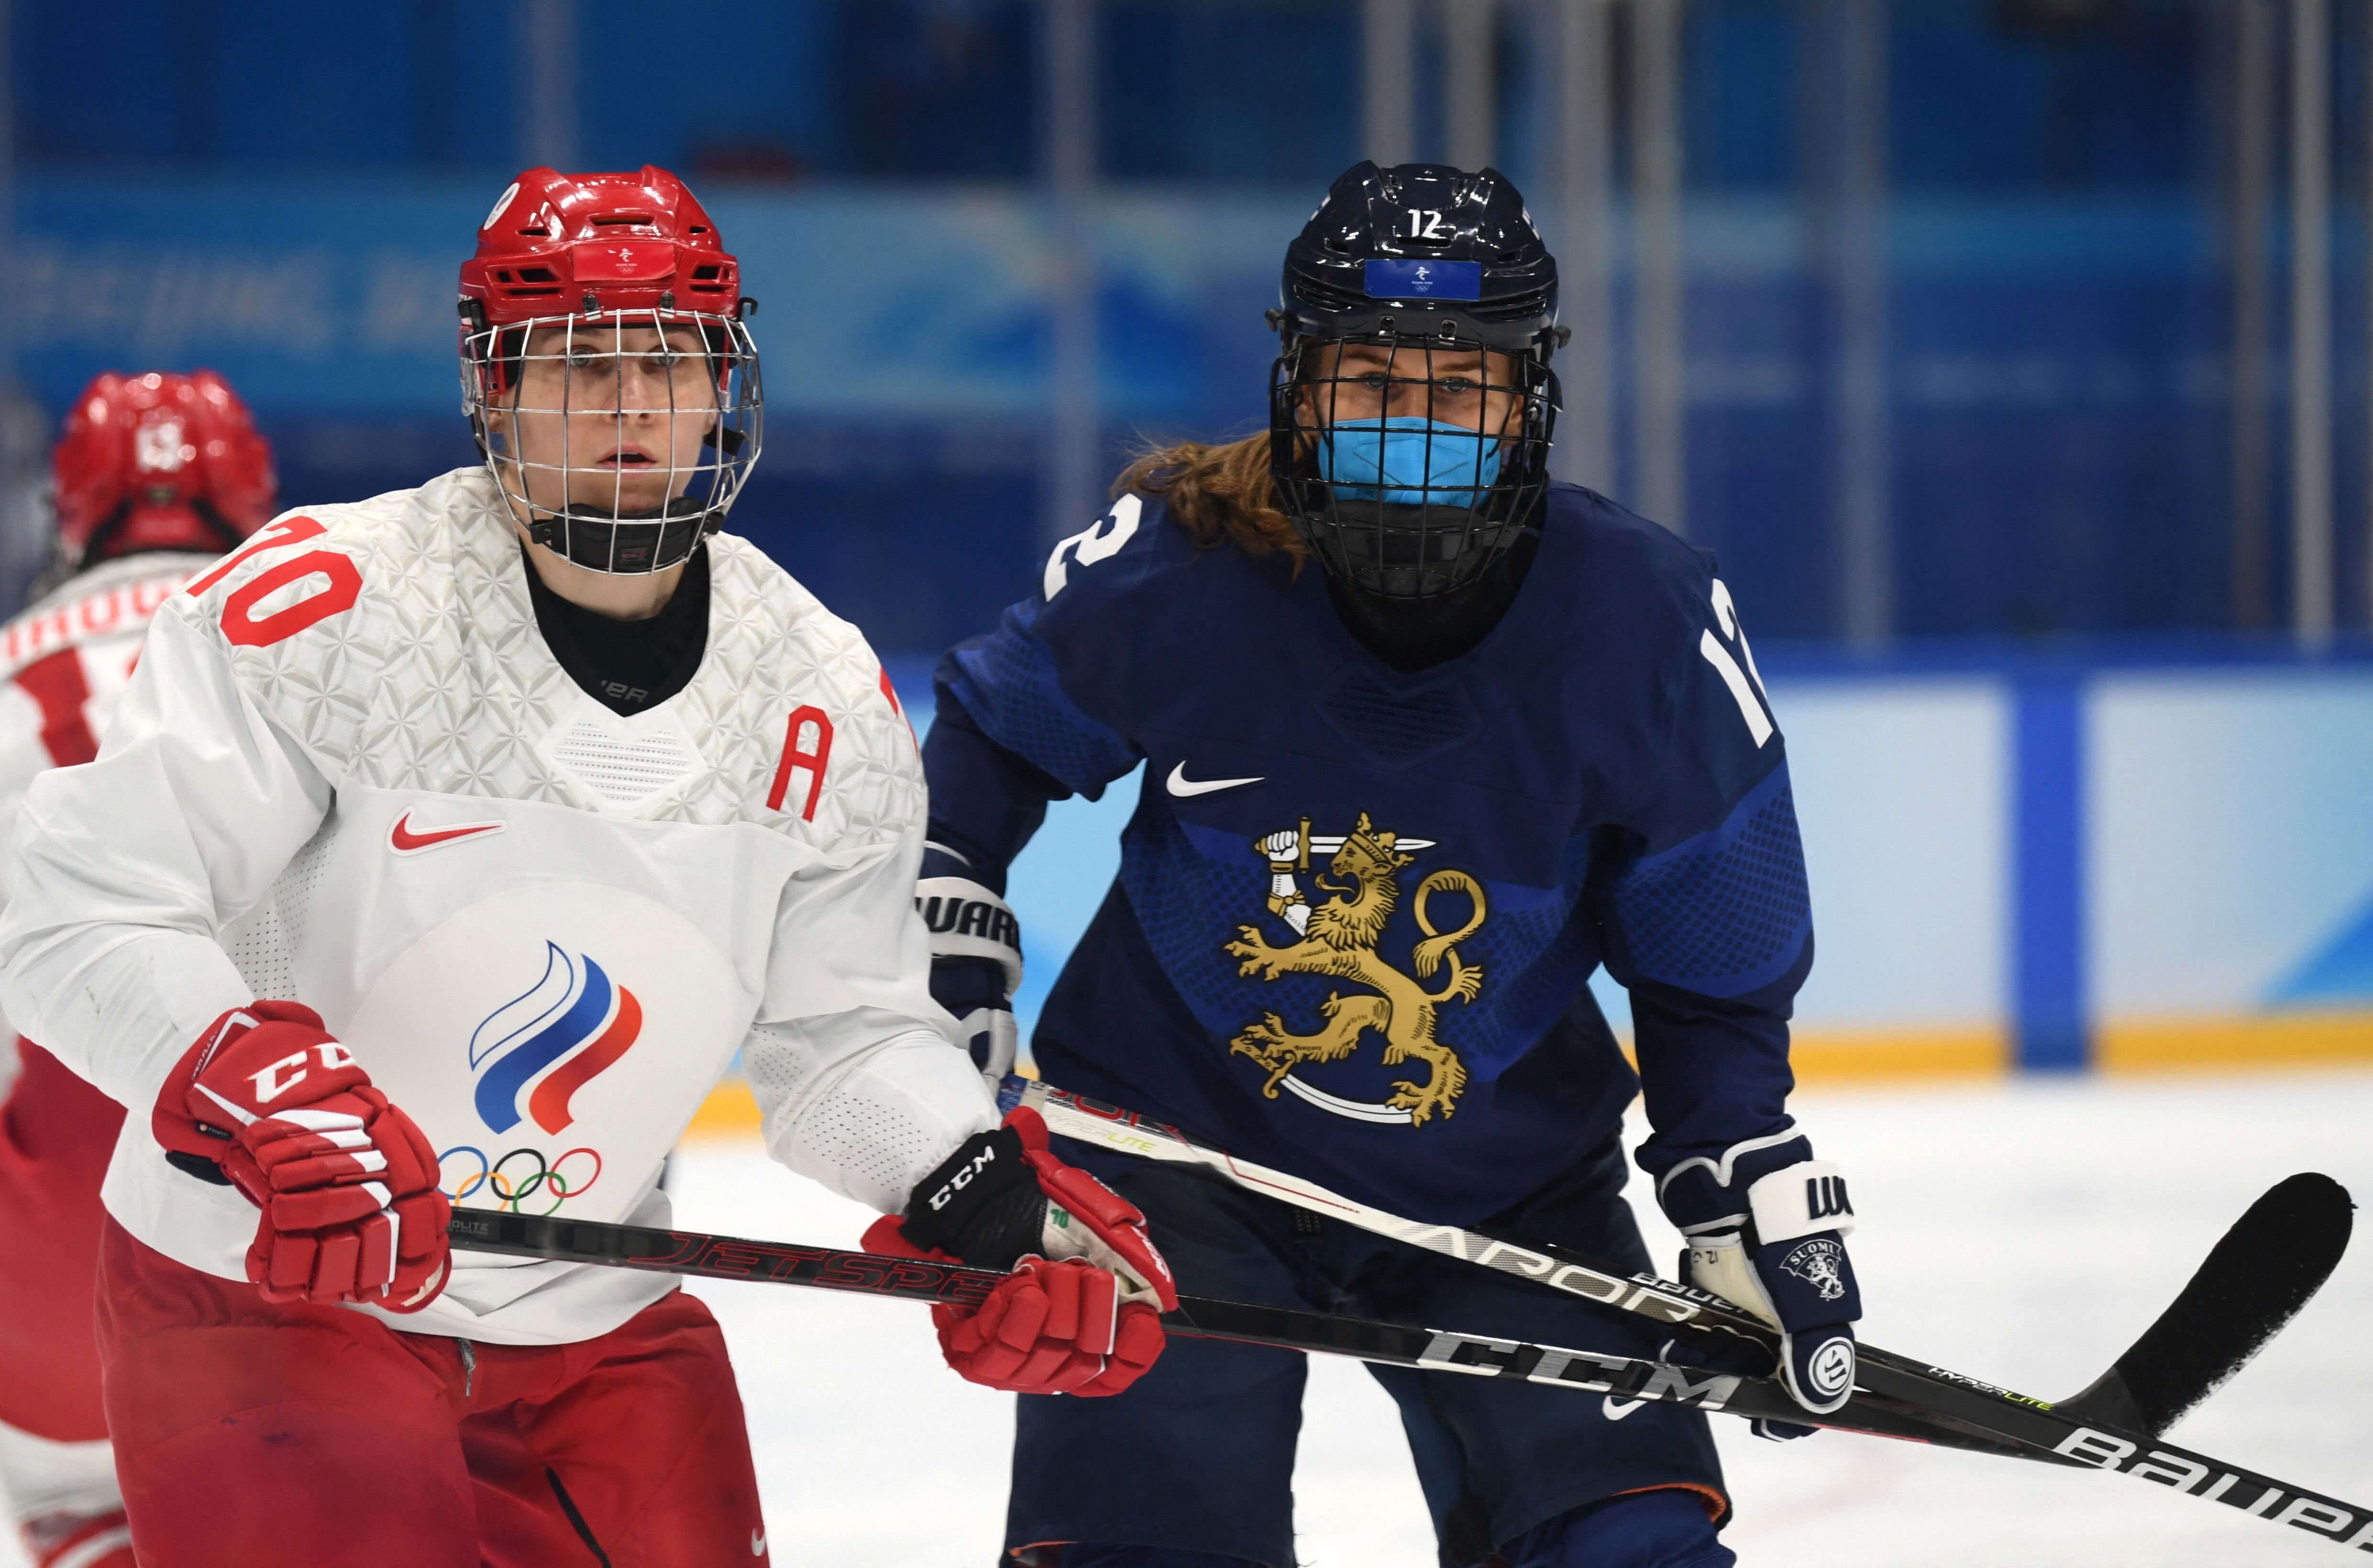 Finland: Women's Olympic hockey team